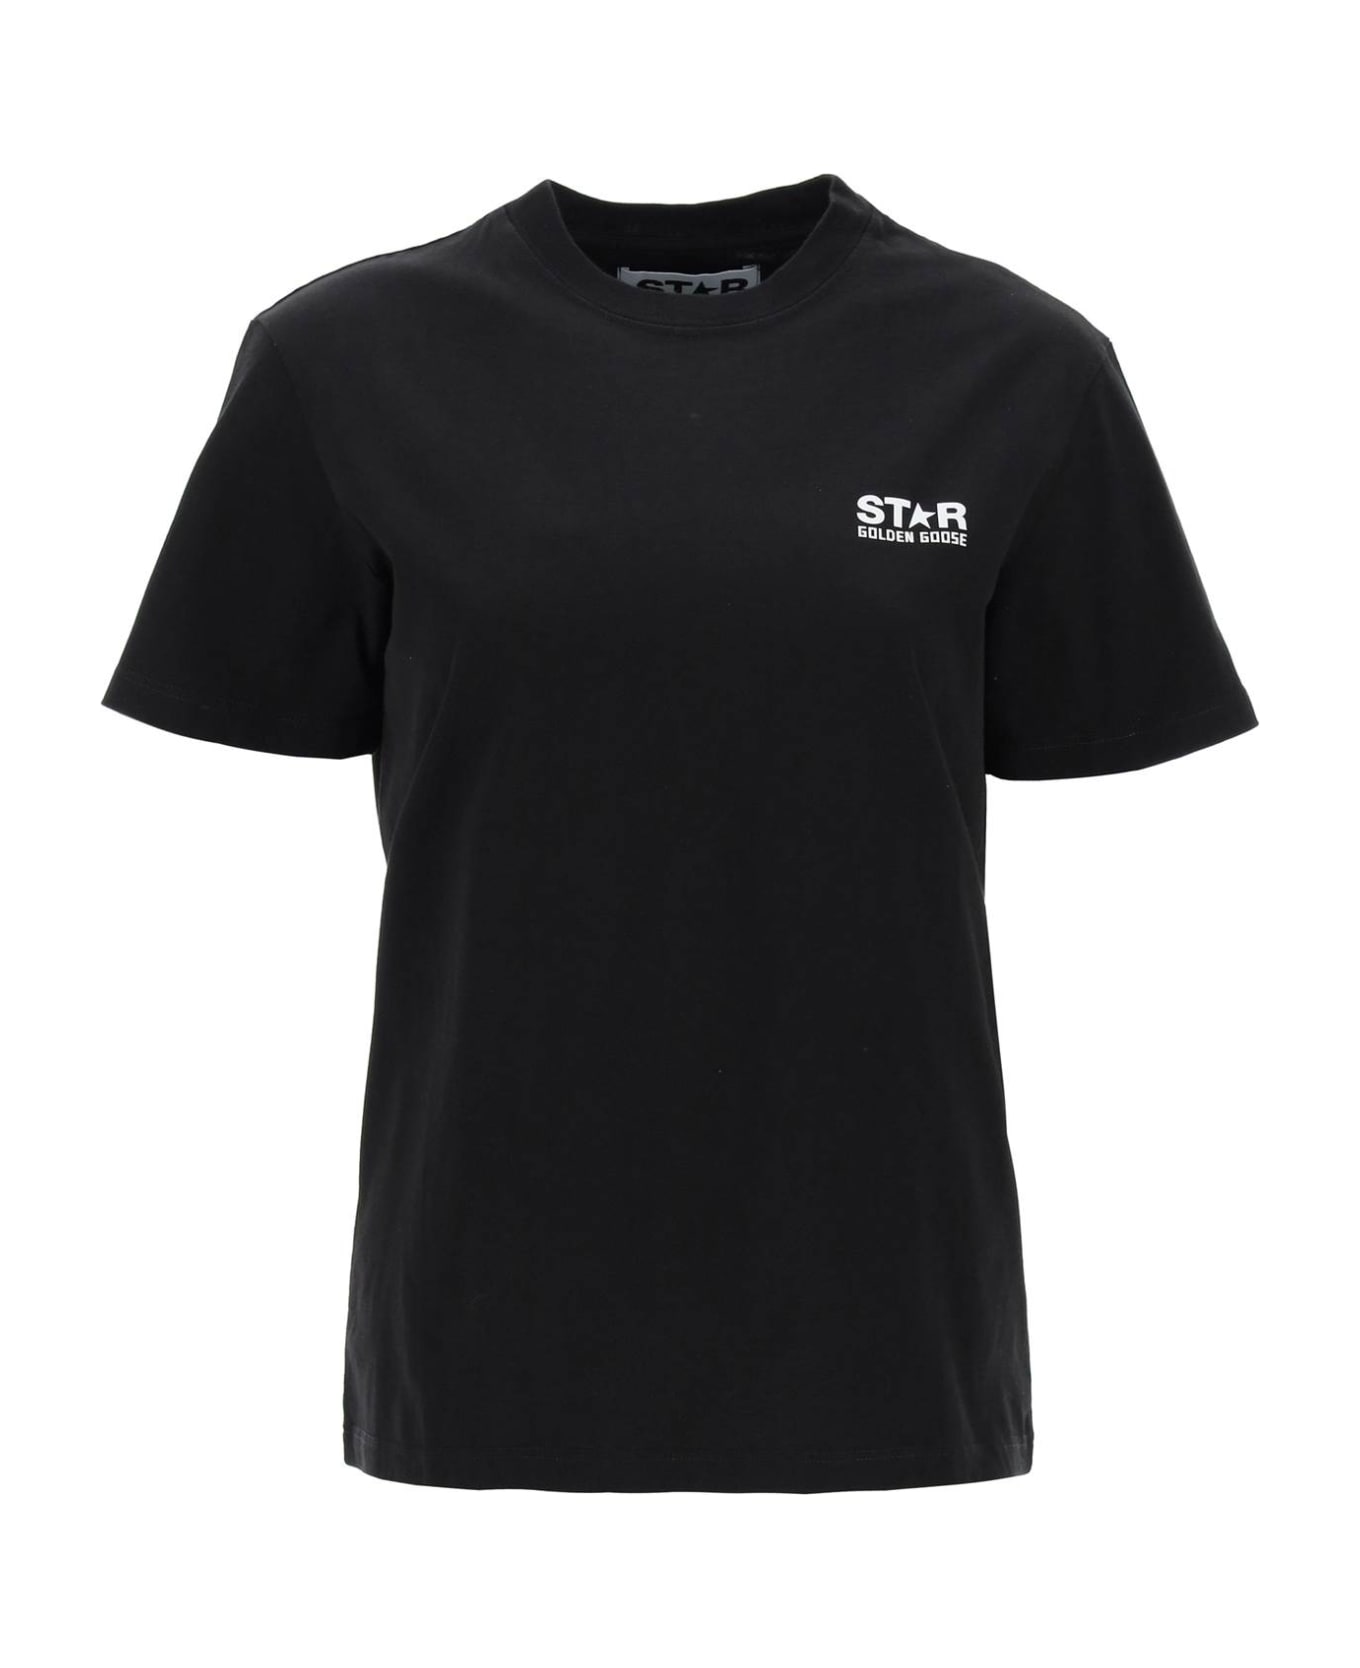 Golden Goose T-shirt With Star Print - BLACK WHITE (Black) Tシャツ